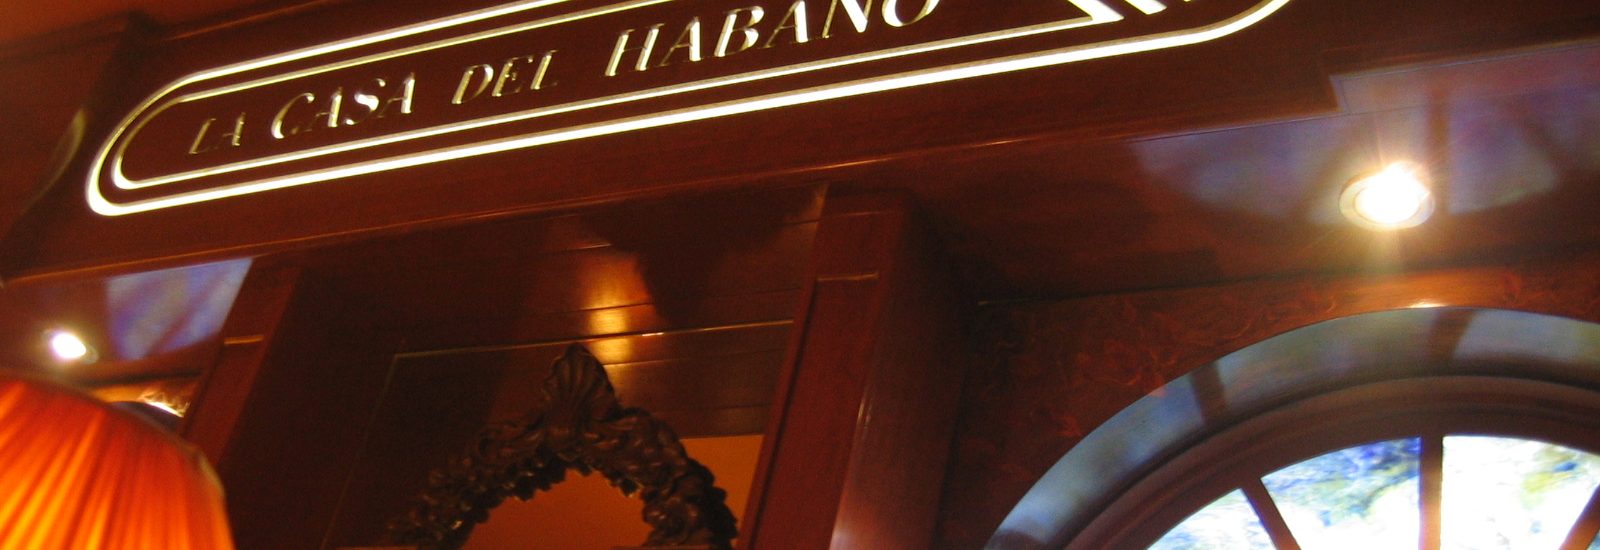 La Casa Del Habano Montreal - A Personal Revisit 1 Year after it's closing.